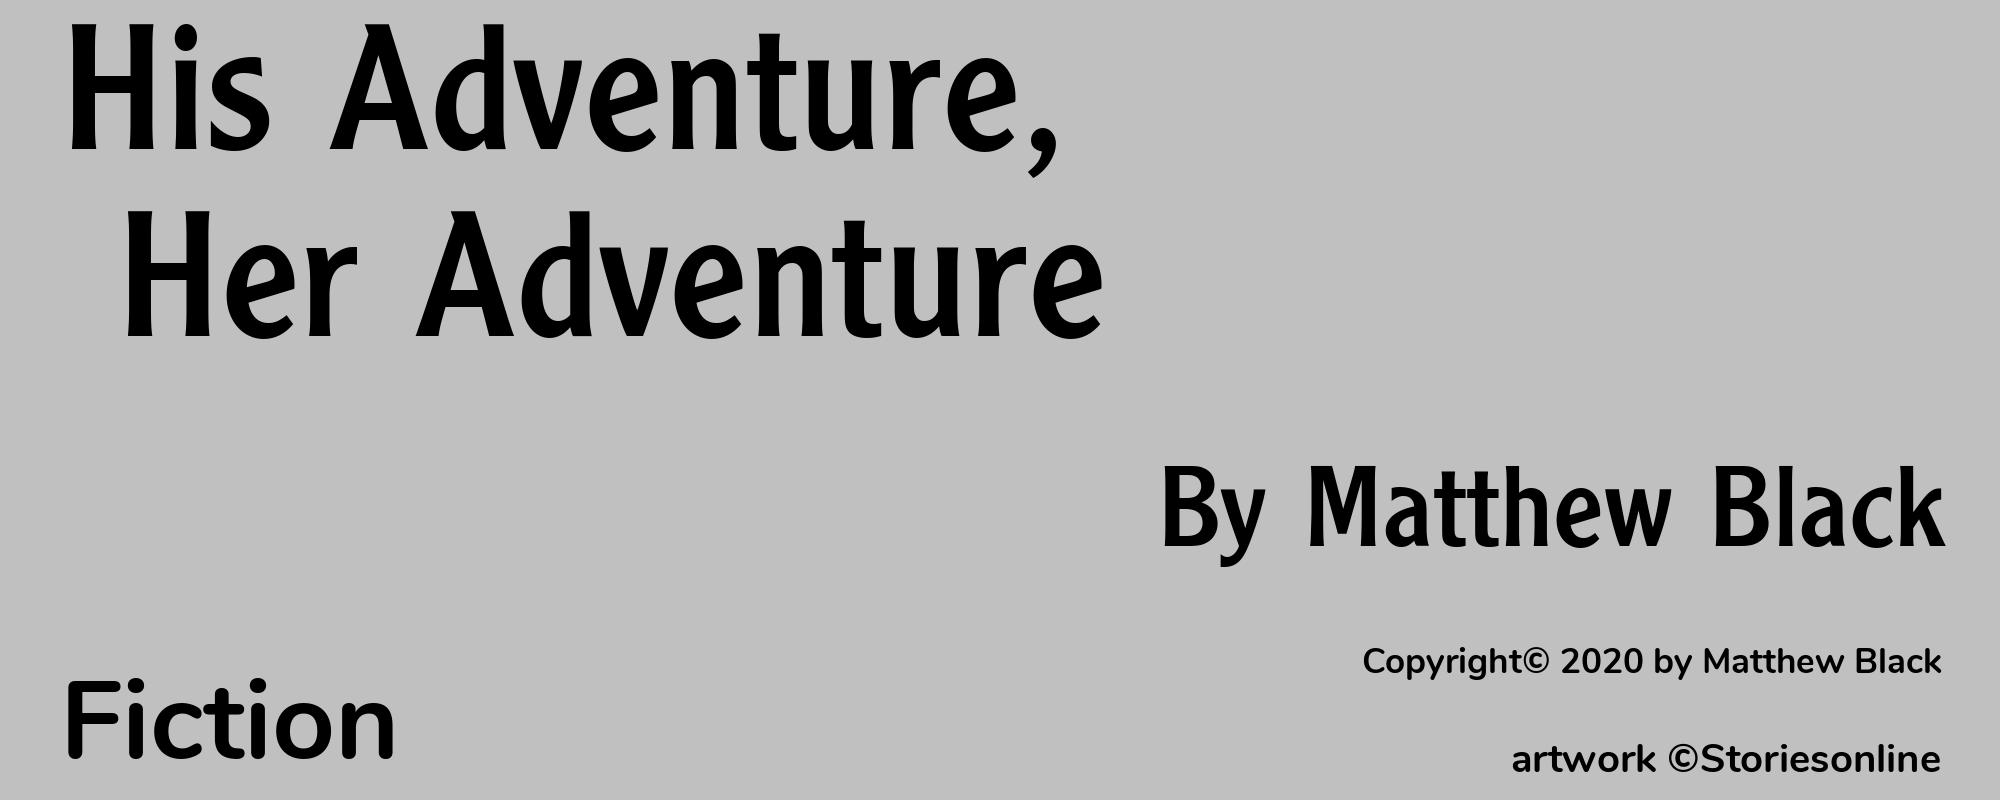 His Adventure, Her Adventure - Cover